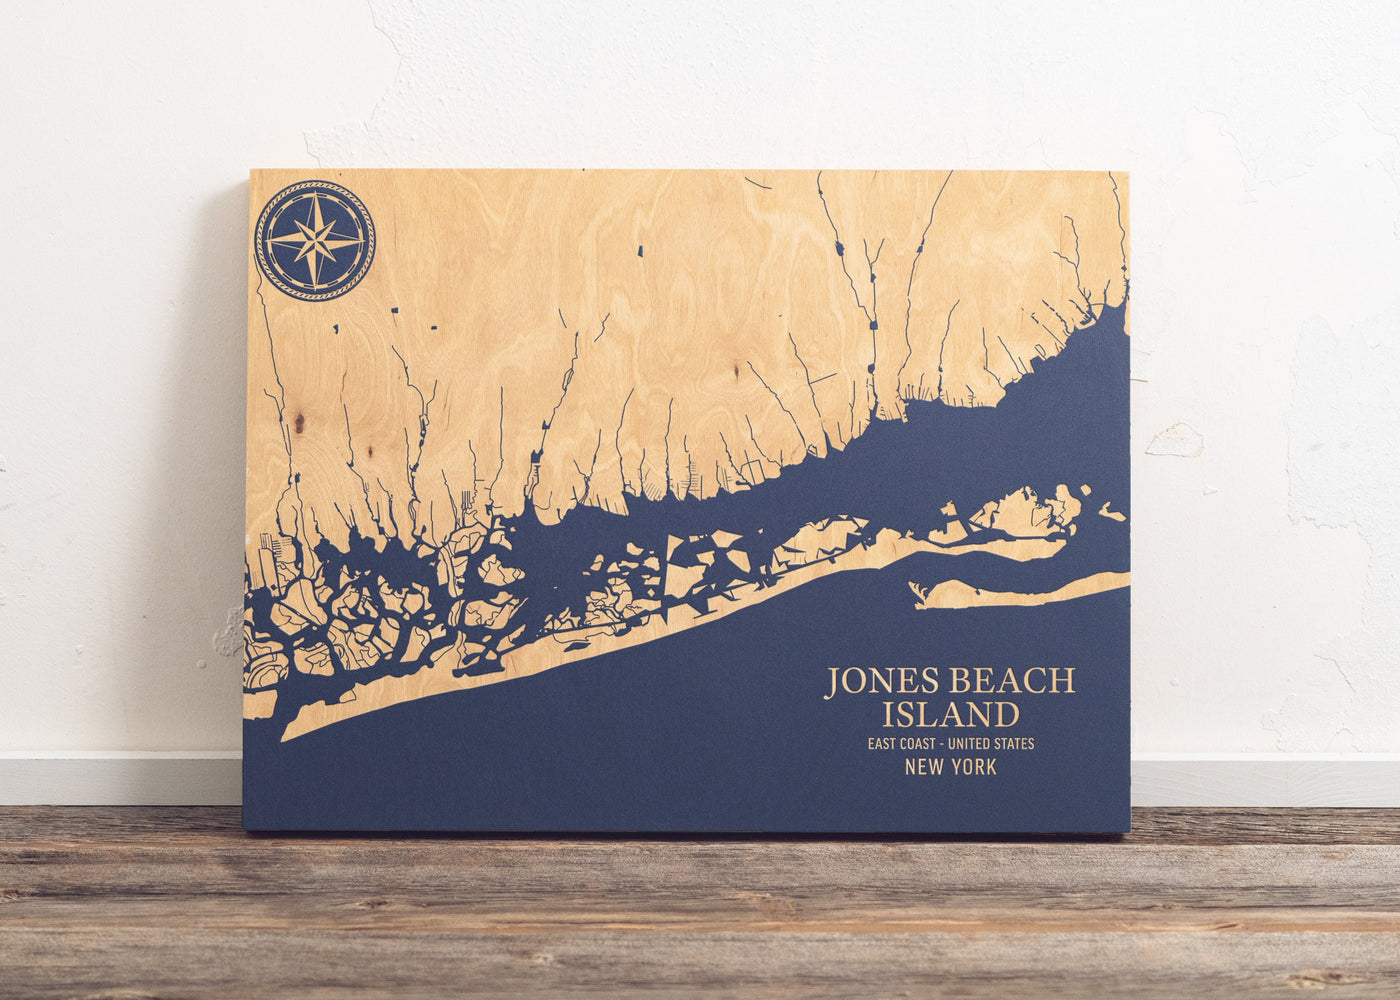 Jones Beach Island, New York